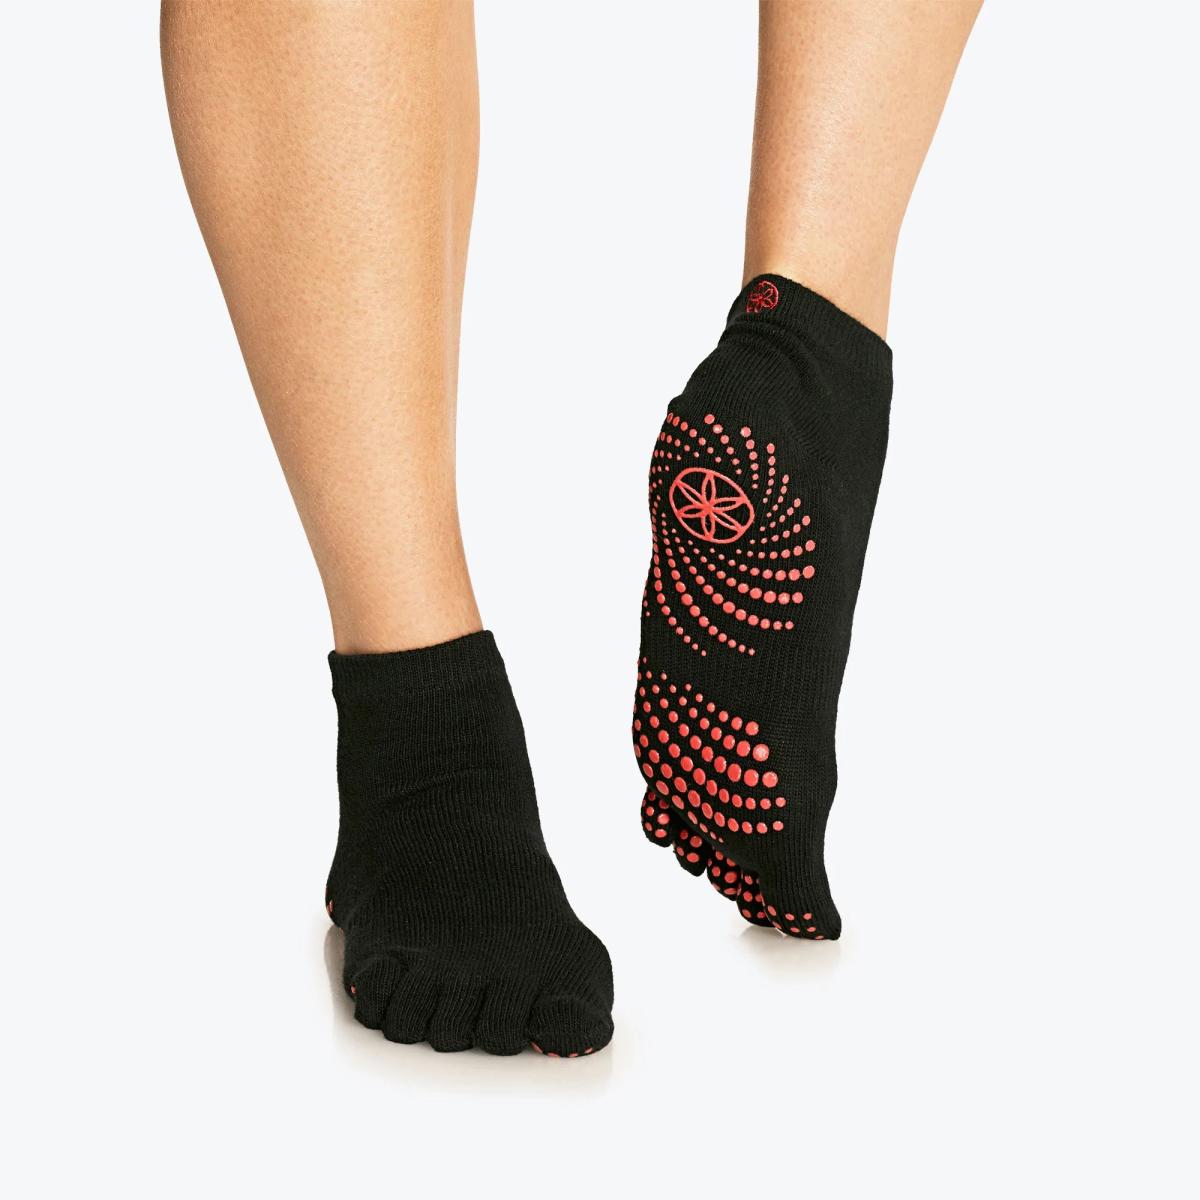 Gaiam Yoga Socks - 1 Mary Jane All Grip, No Slip NEW in Package 